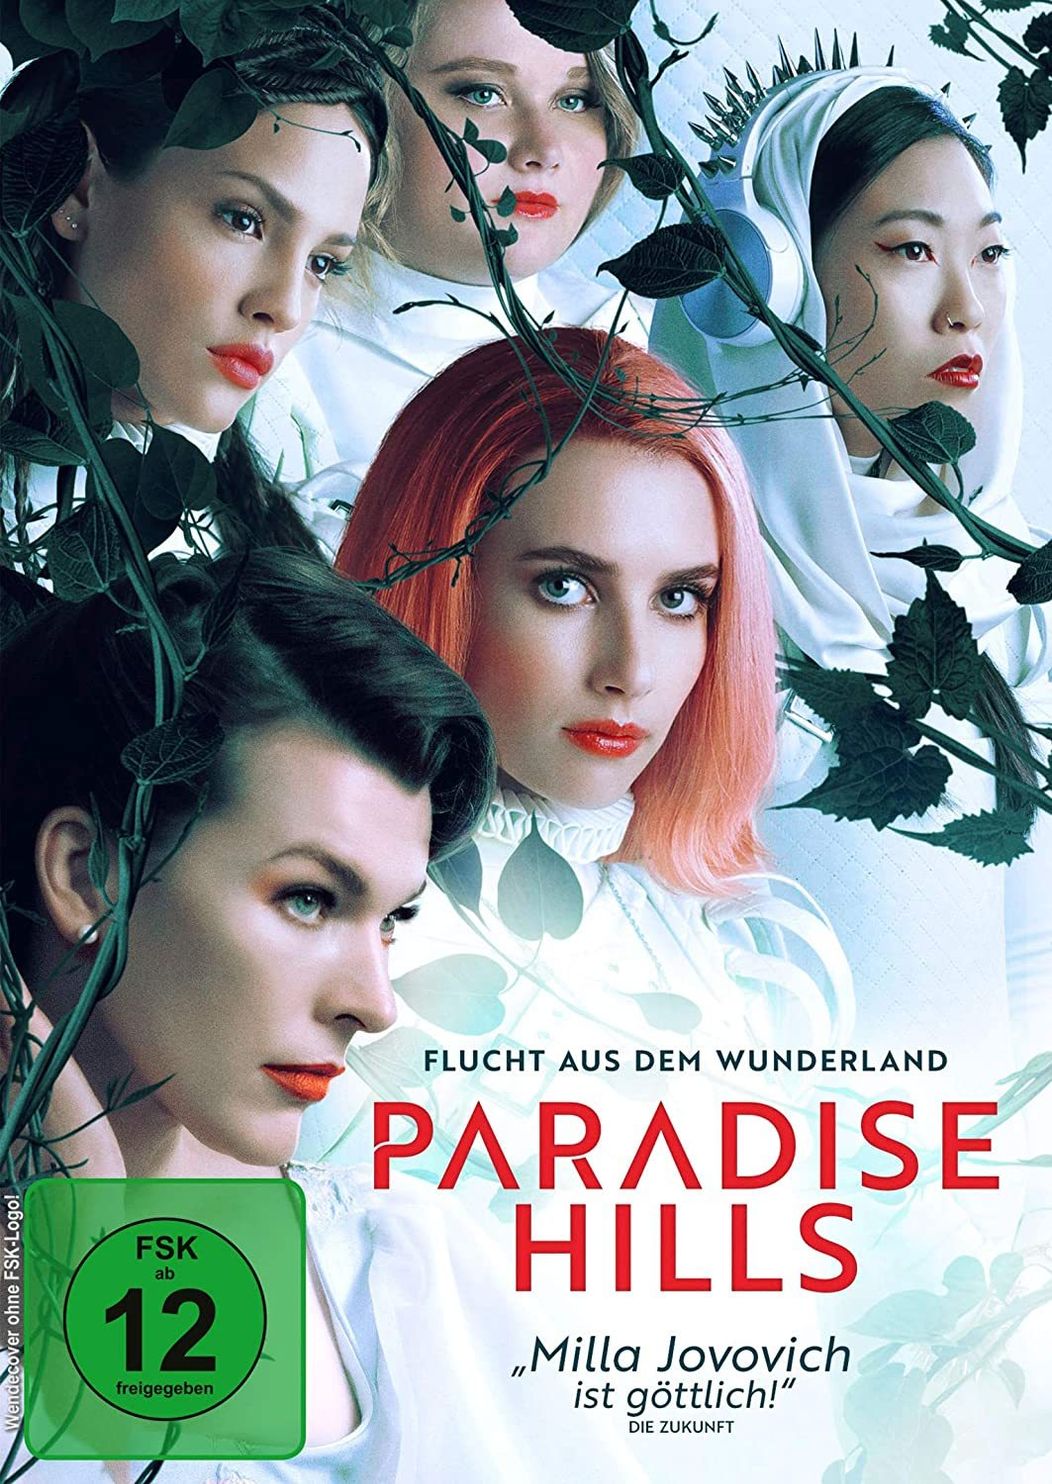 Paradise Hills - Flucht aus dem Wunderland DVD | Weltbild.at